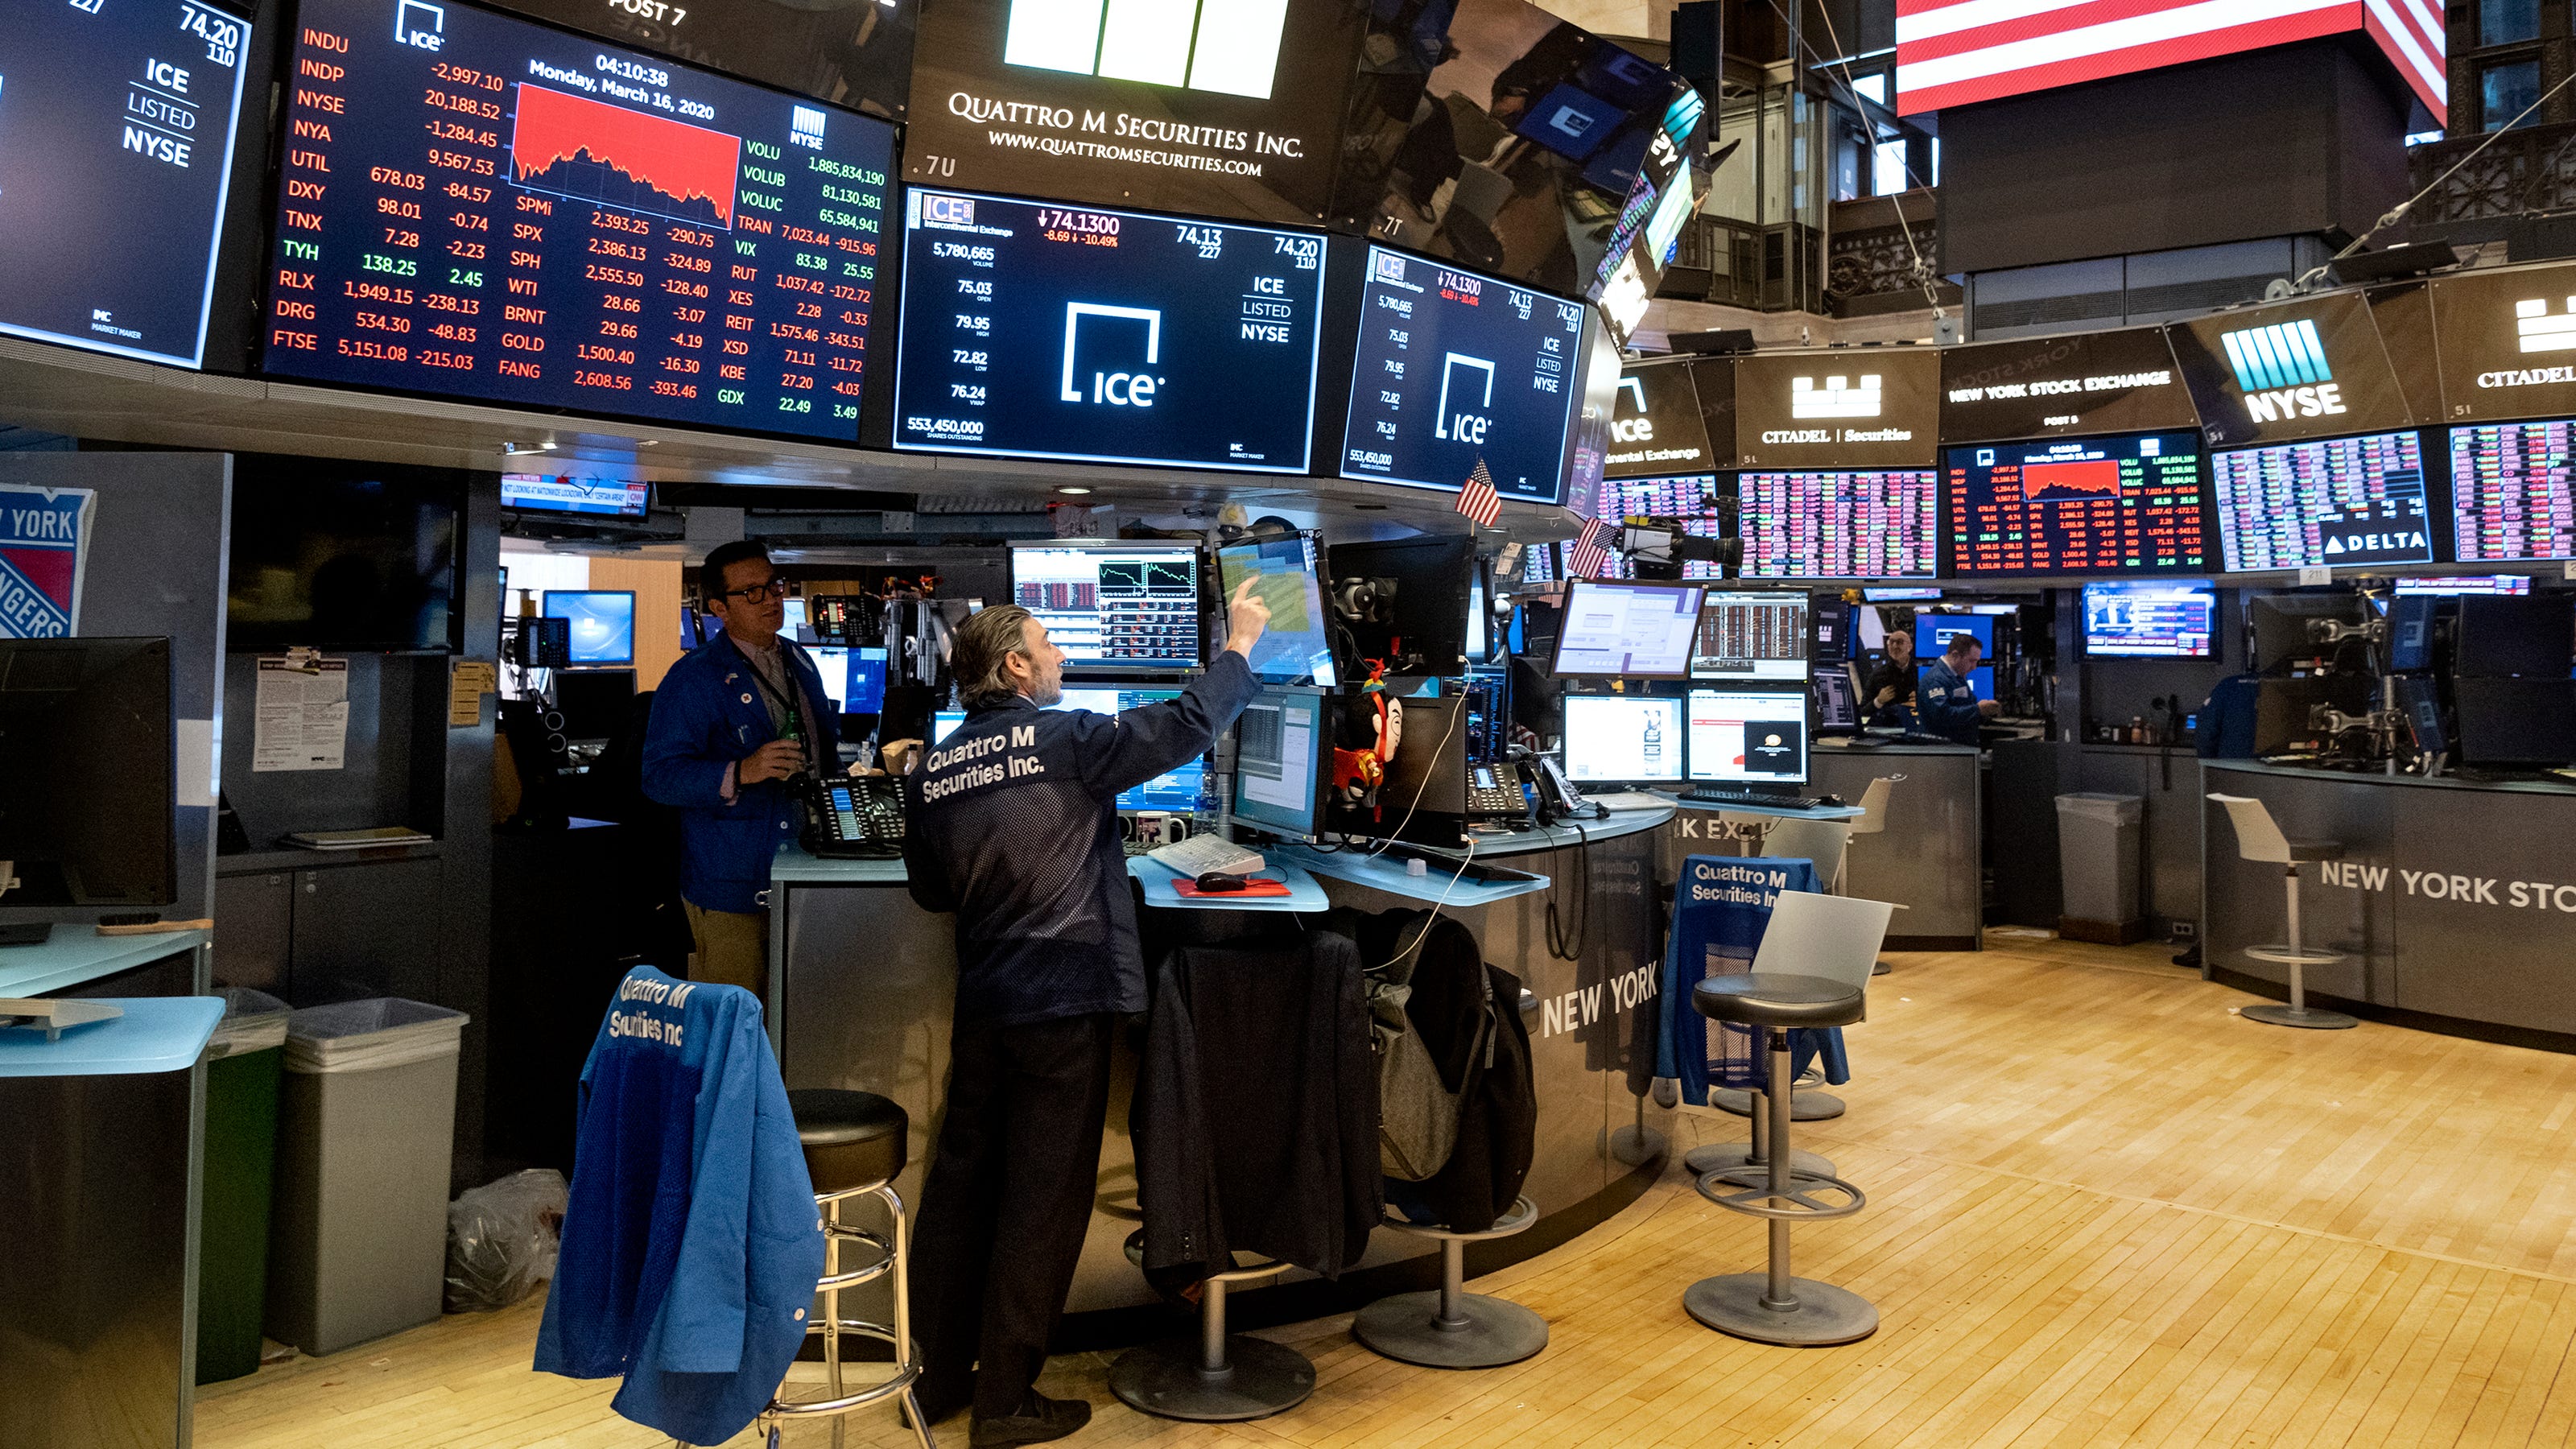 New York Stock Exchange trading floor to reopen with precautions